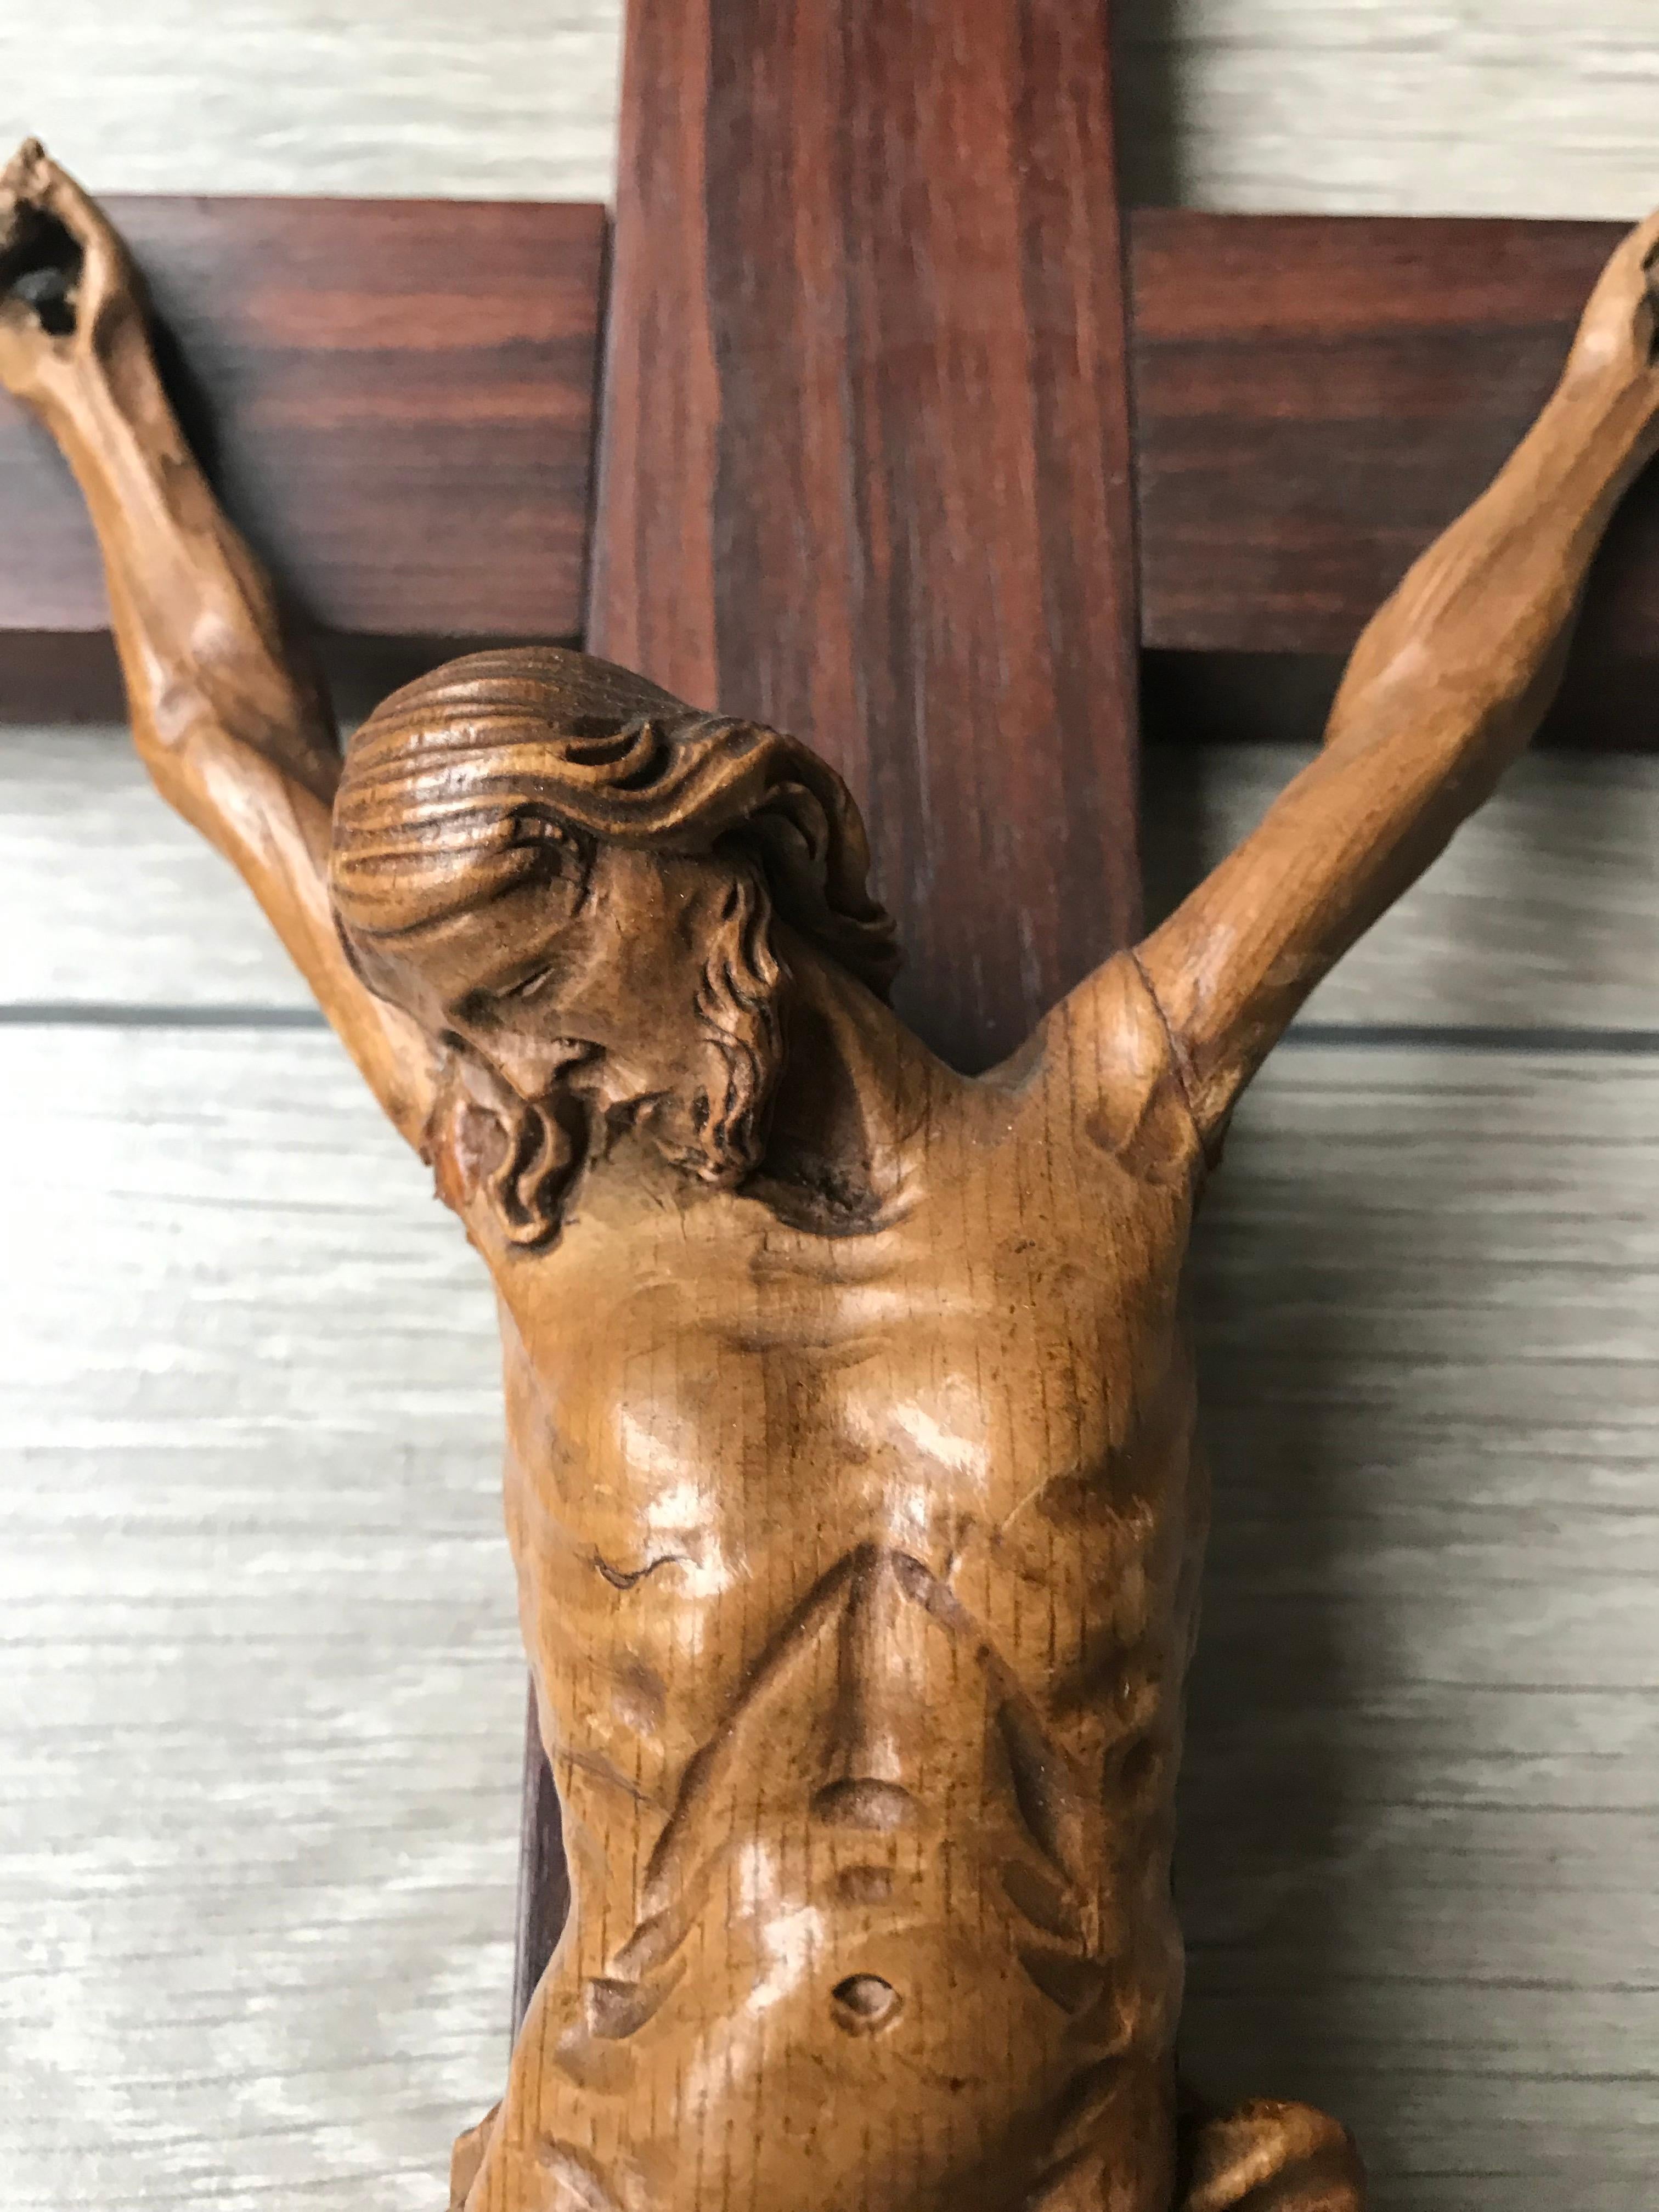 antique wooden crucifix